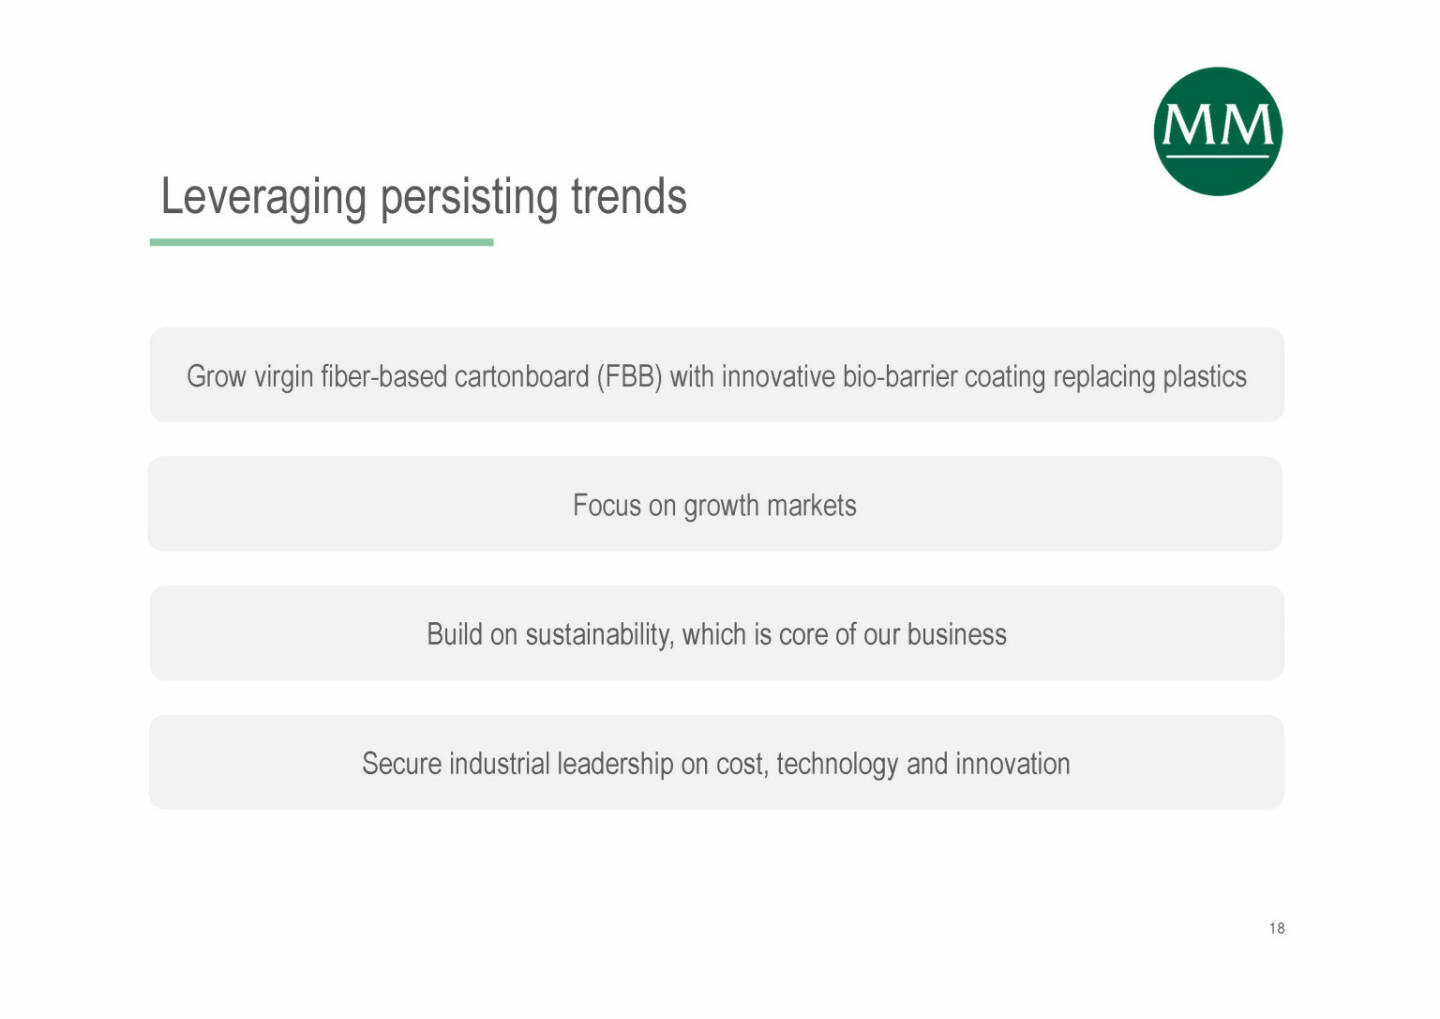 Mayr-Melnhof - Leveraging persisting trends